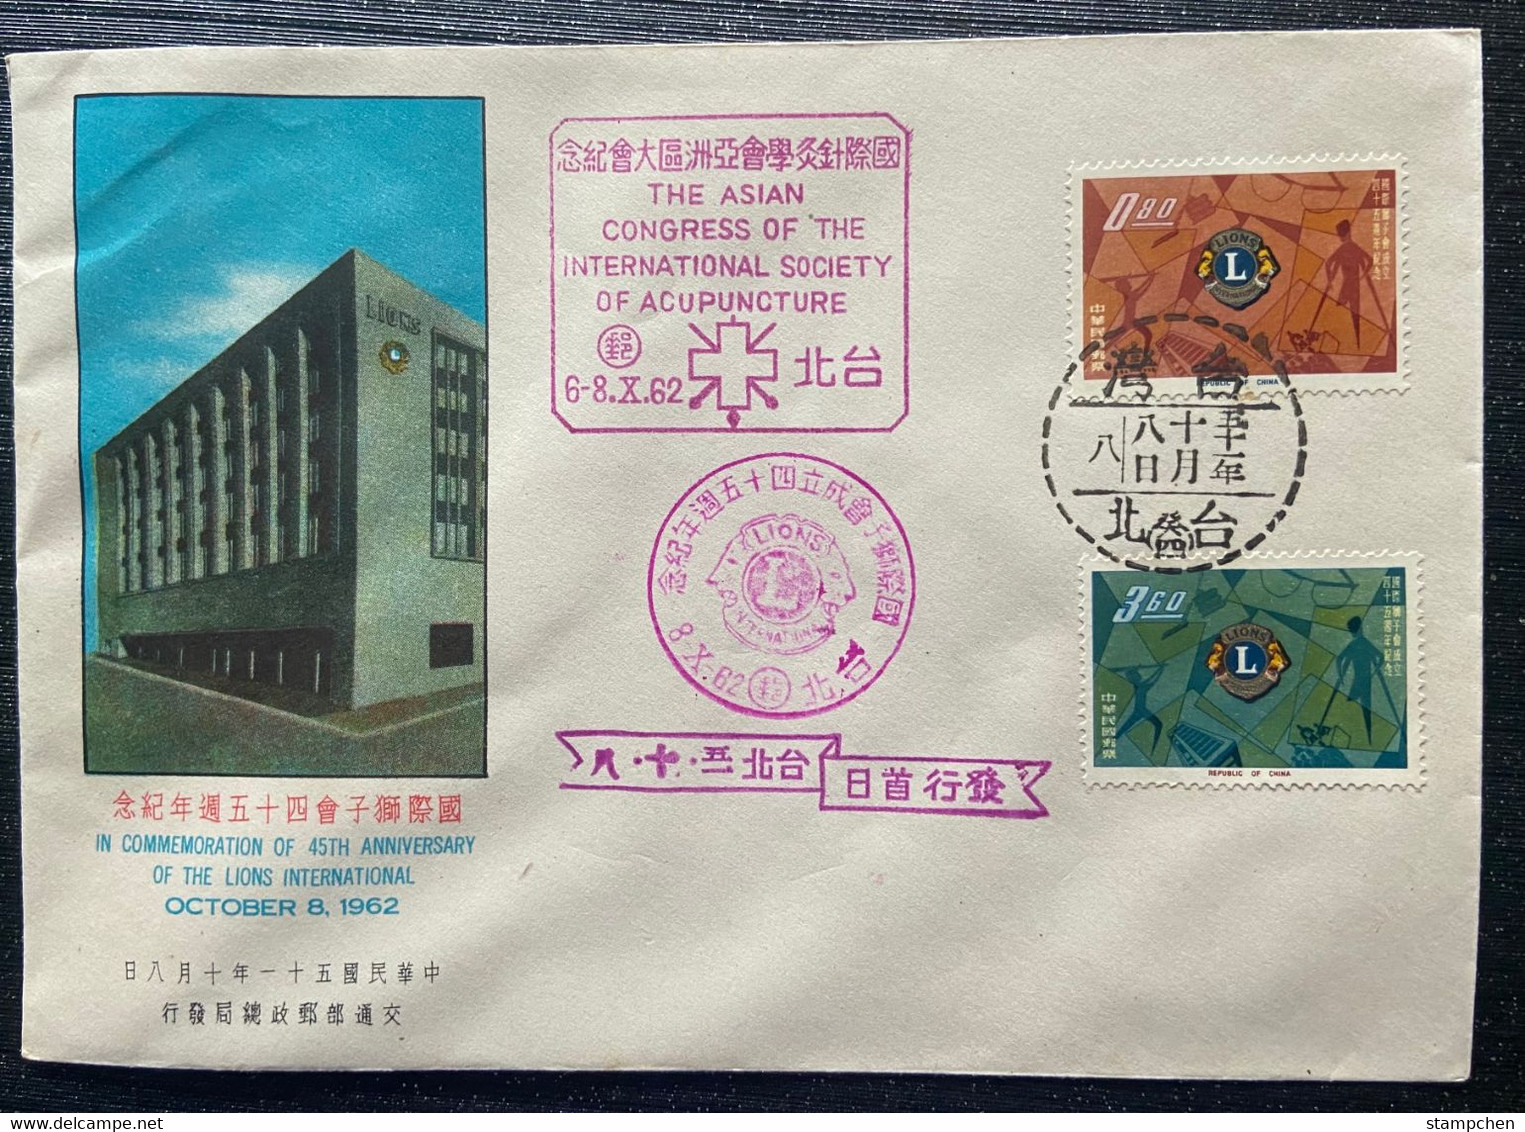 FDC - FDC Taiwan 1962 45th Anni Lions International Stamps emblem